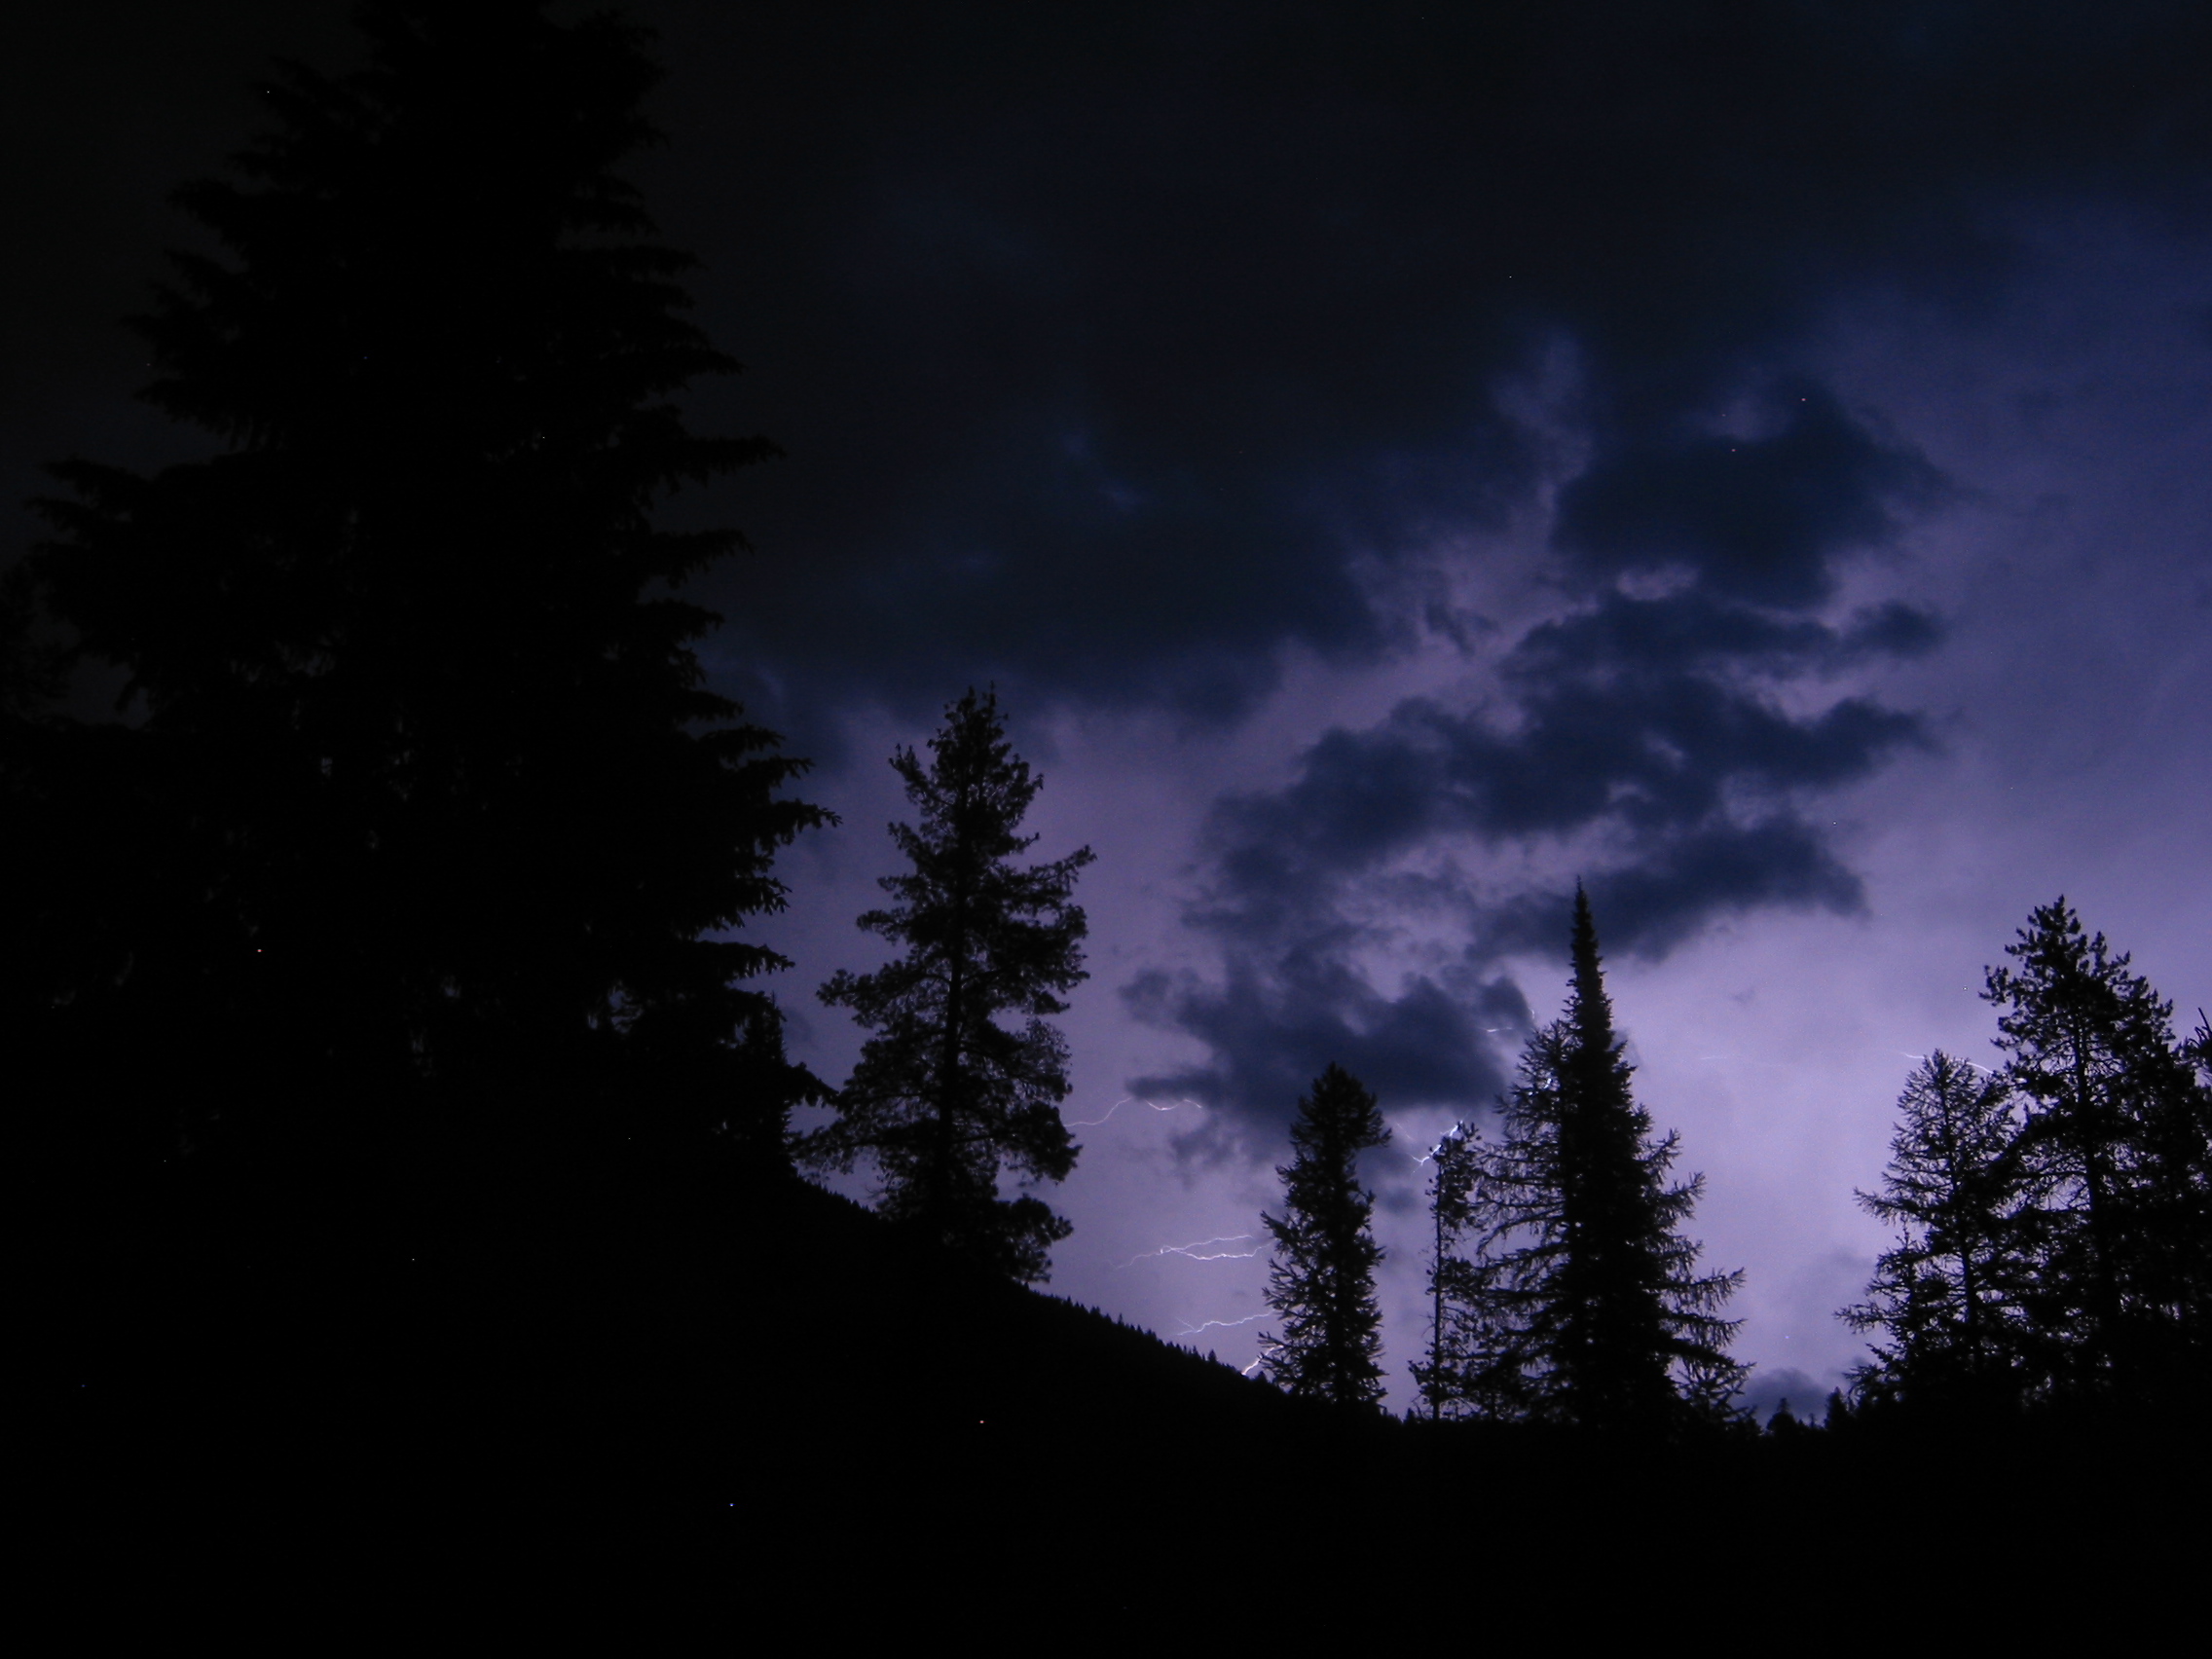 A dark and stormy night scene